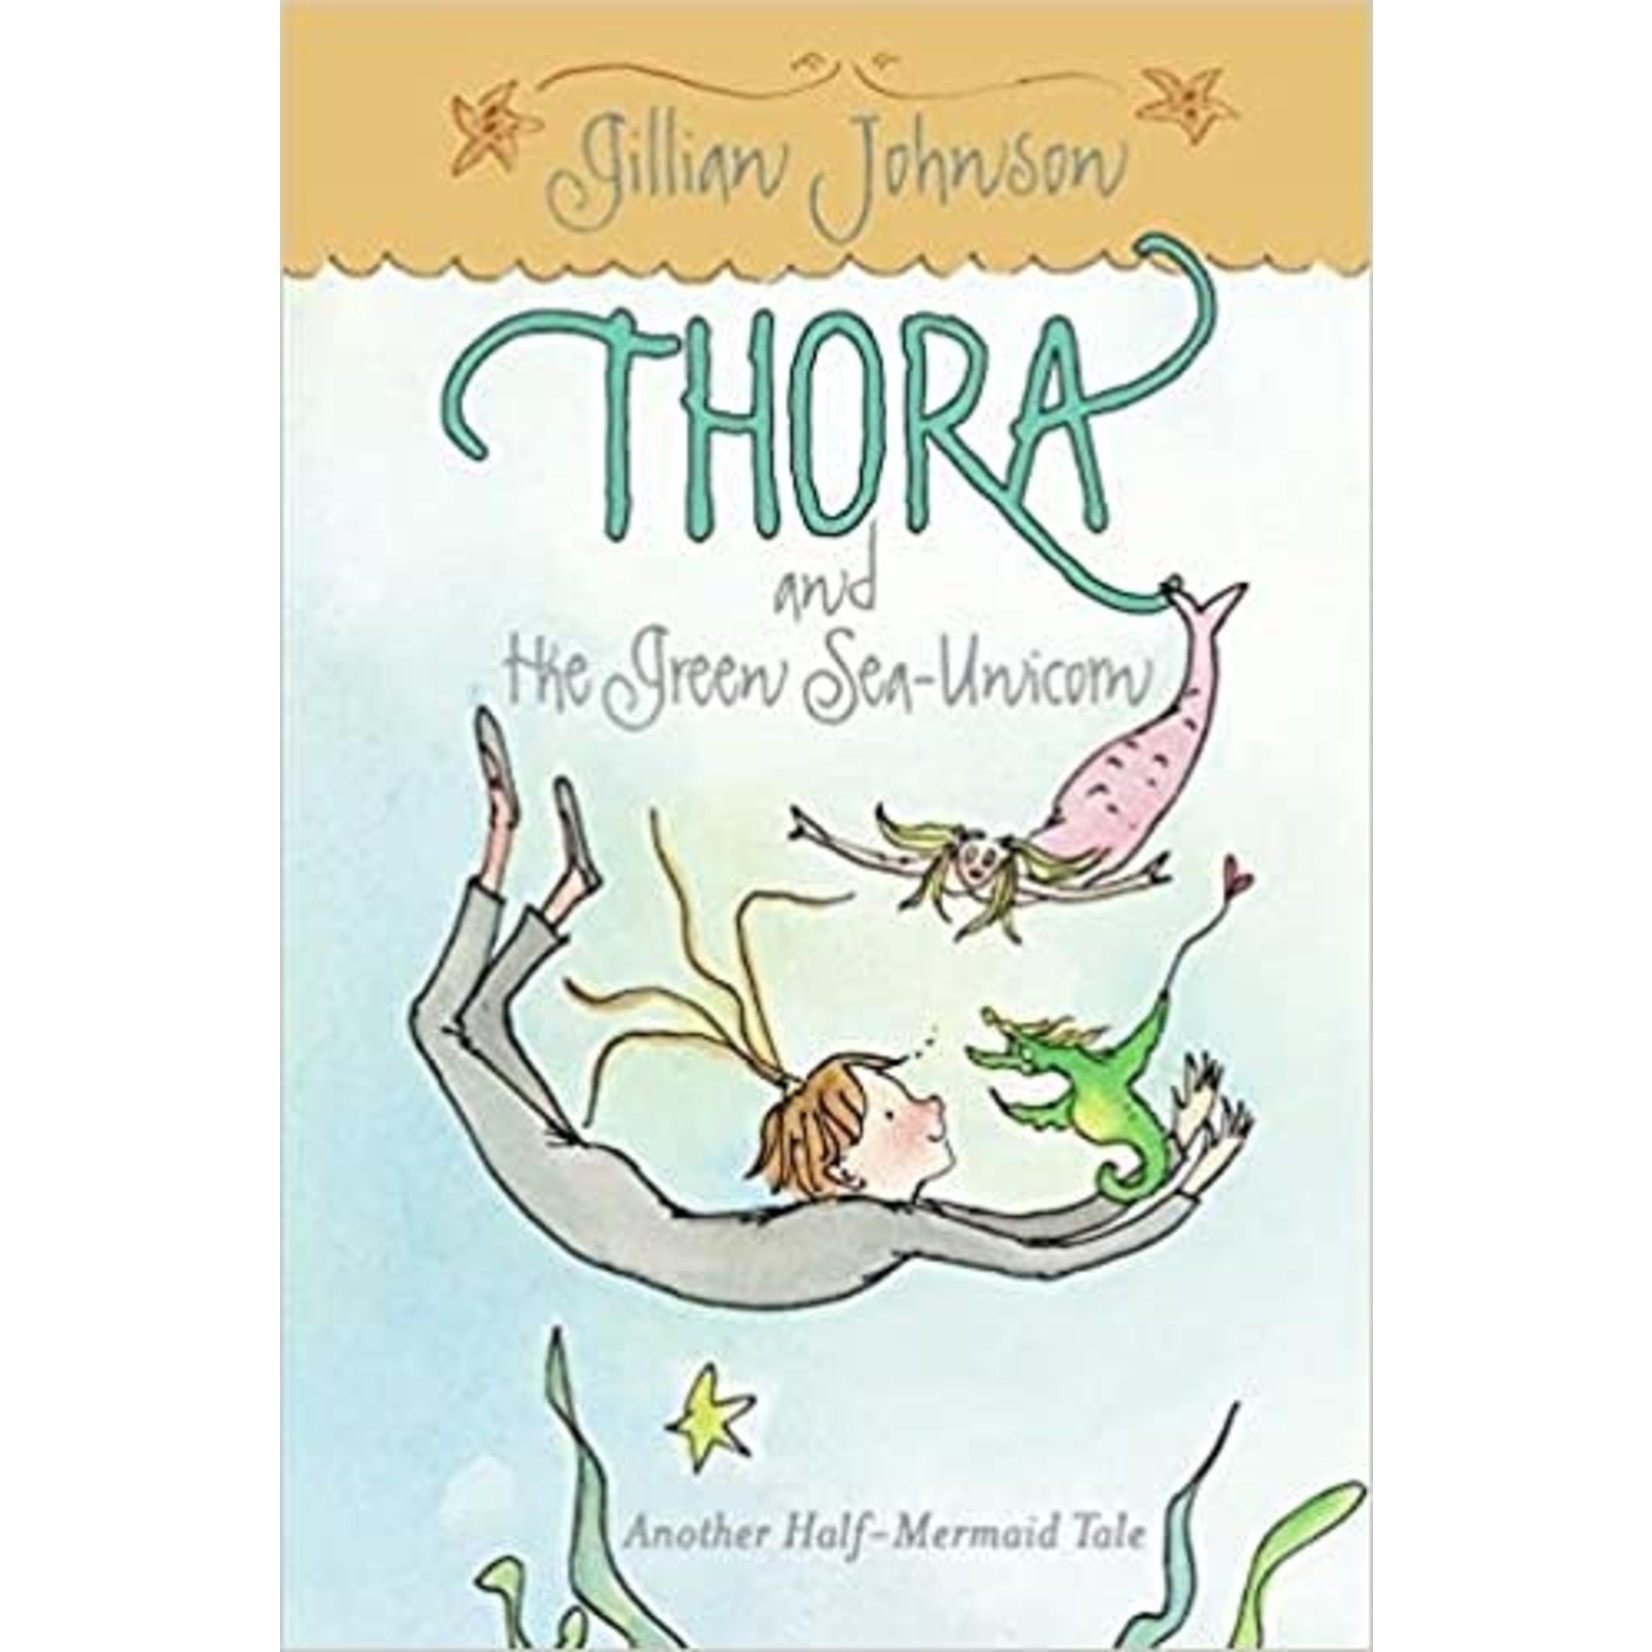 Gillian Johnson Thora and Green Sea Unicorn